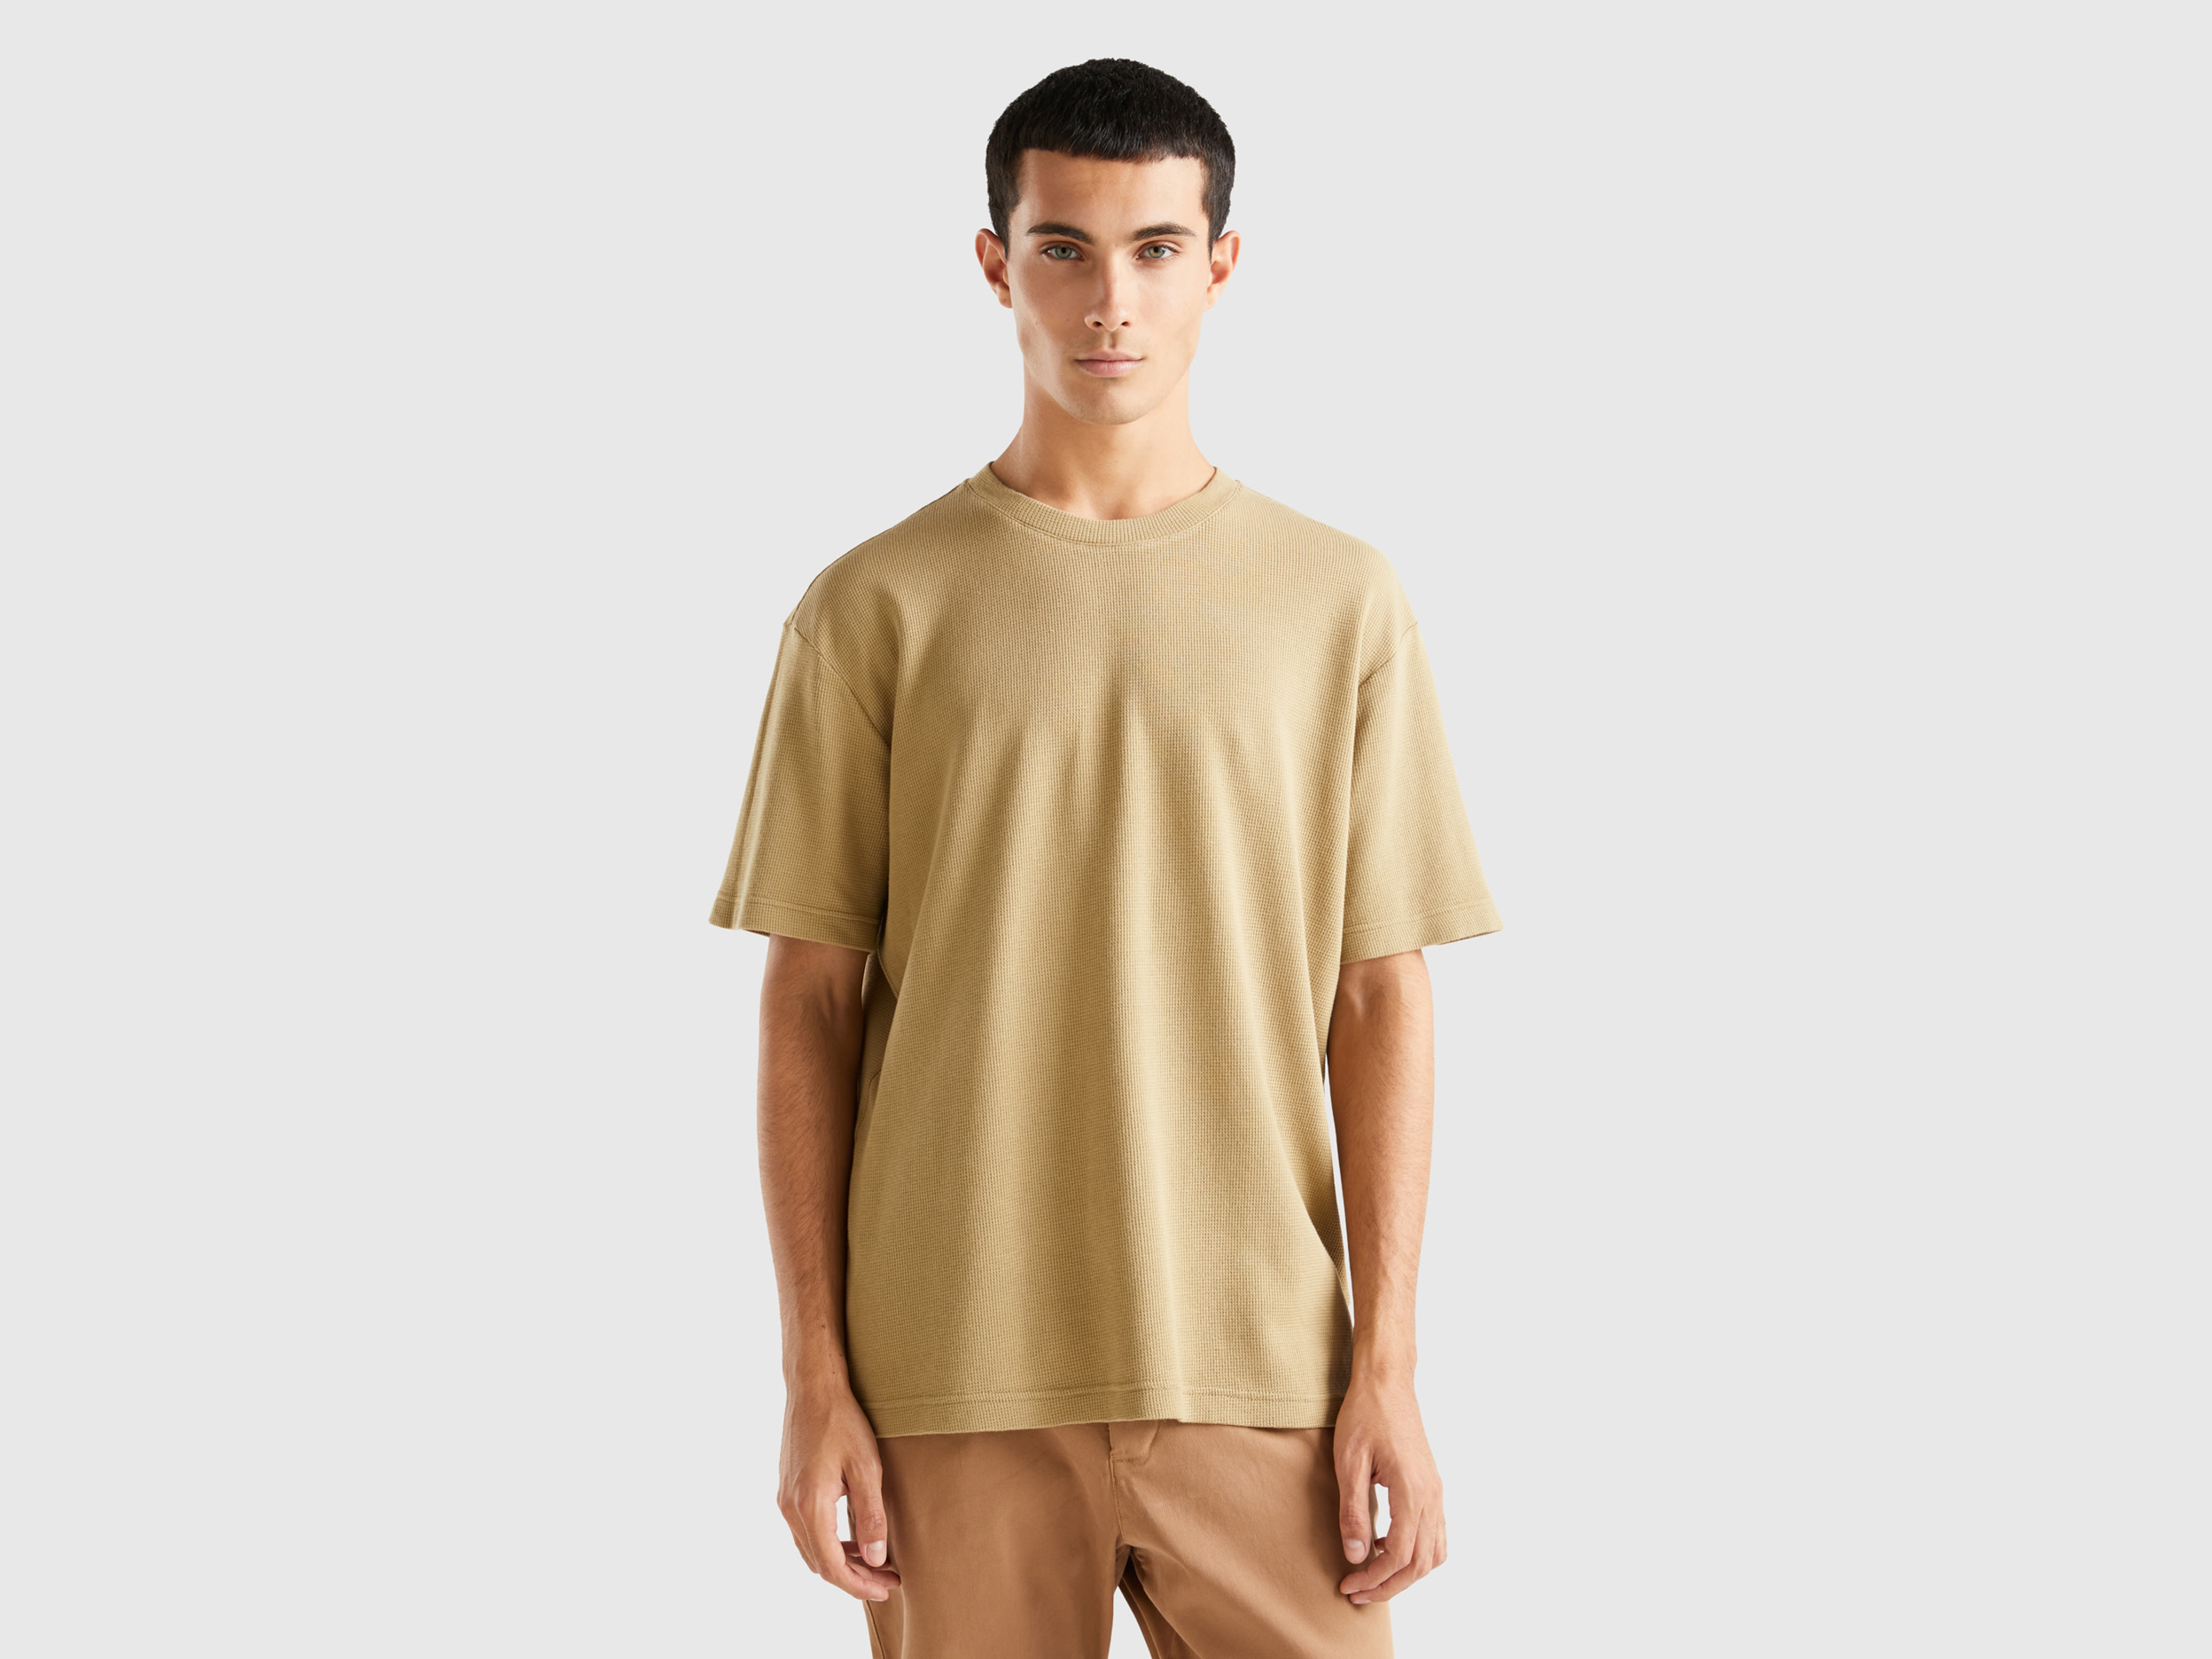 Benetton, Relaxed Fit T-shirt, size M, Beige, Men